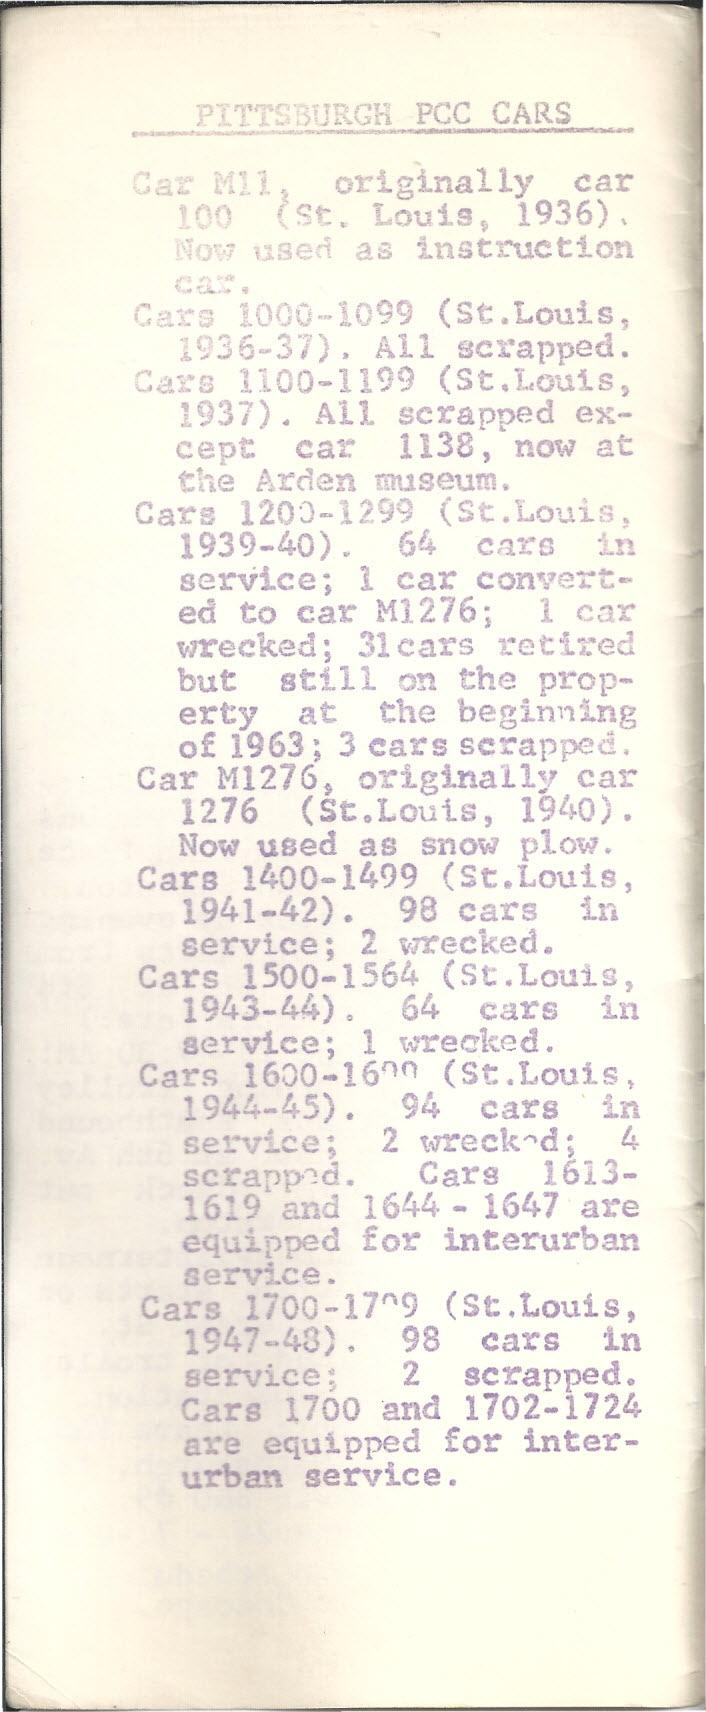 originally car Ct. Louis. 1936). 8.3 l.1."lstruetion '.. '... " -:. _. :."CO ~1099 (St. Louis $ &S36-31). All scrapped. '":.;cs 1~_OO-11<)9(St.Louis, 1937).